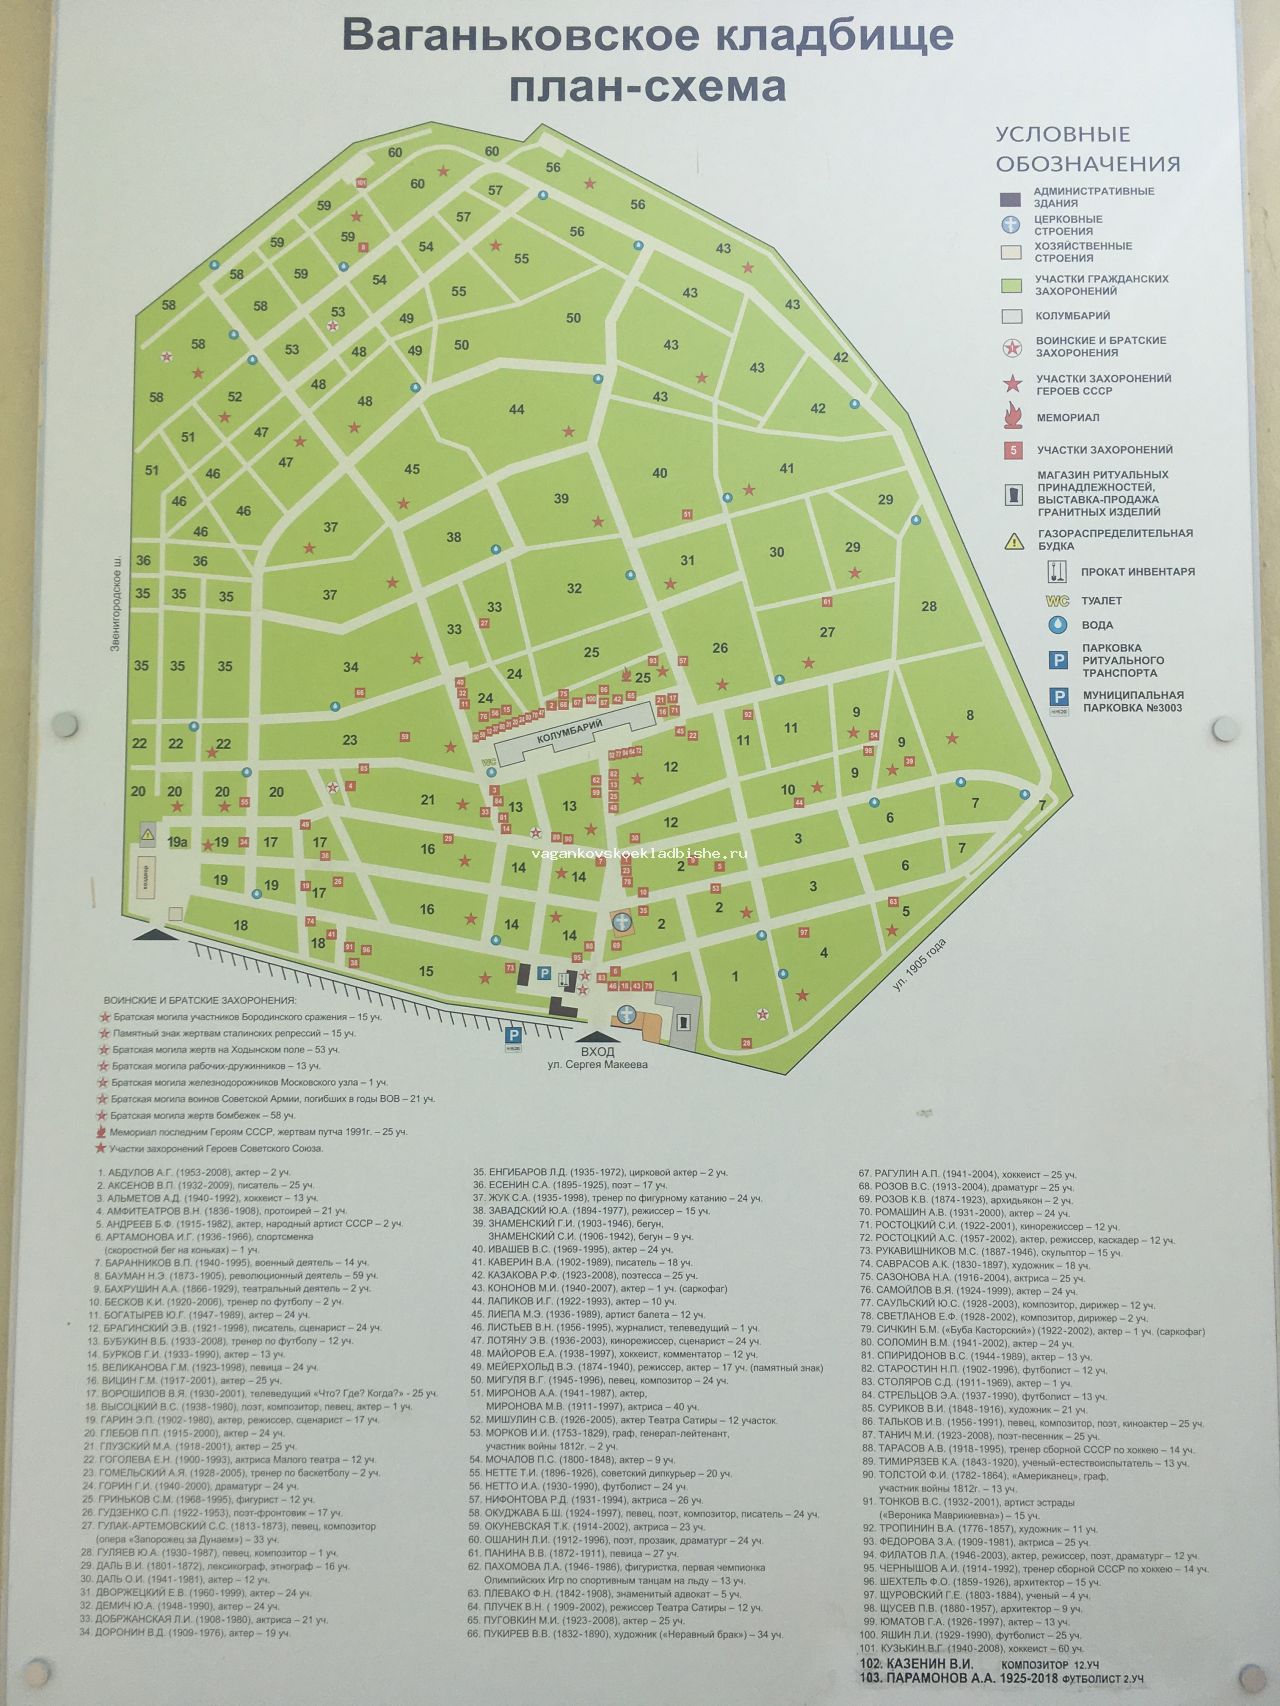 План-схема участков Ваганьковского кладбища